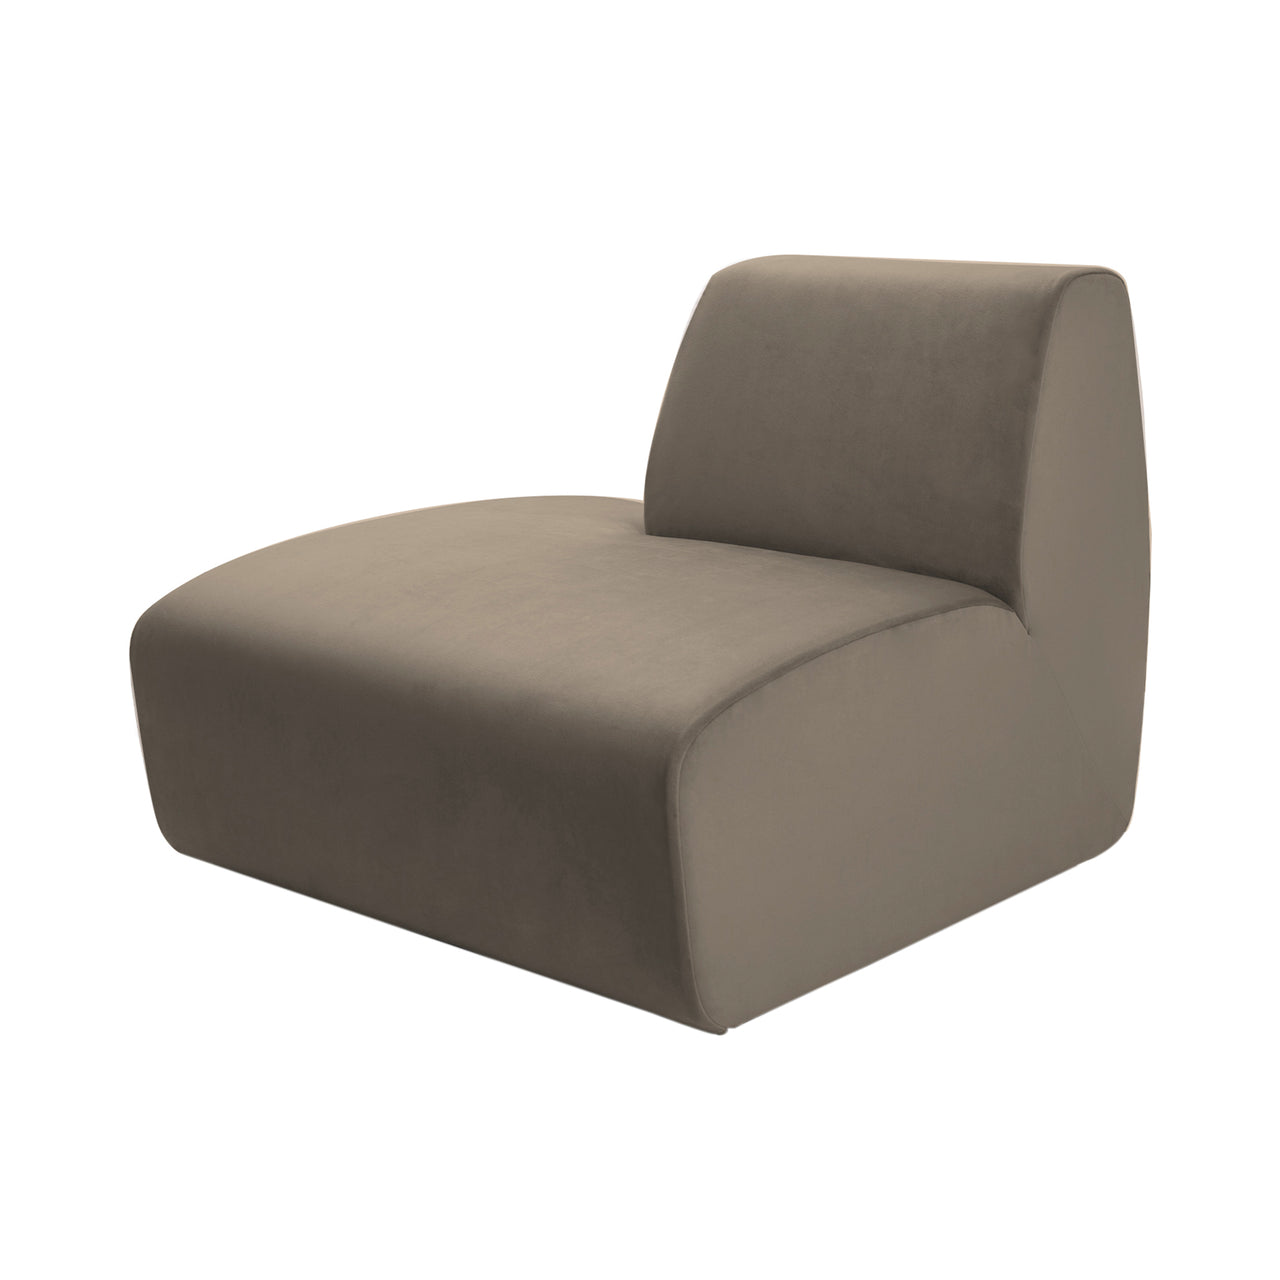 Infinity Sofa Modules: Arm - Right